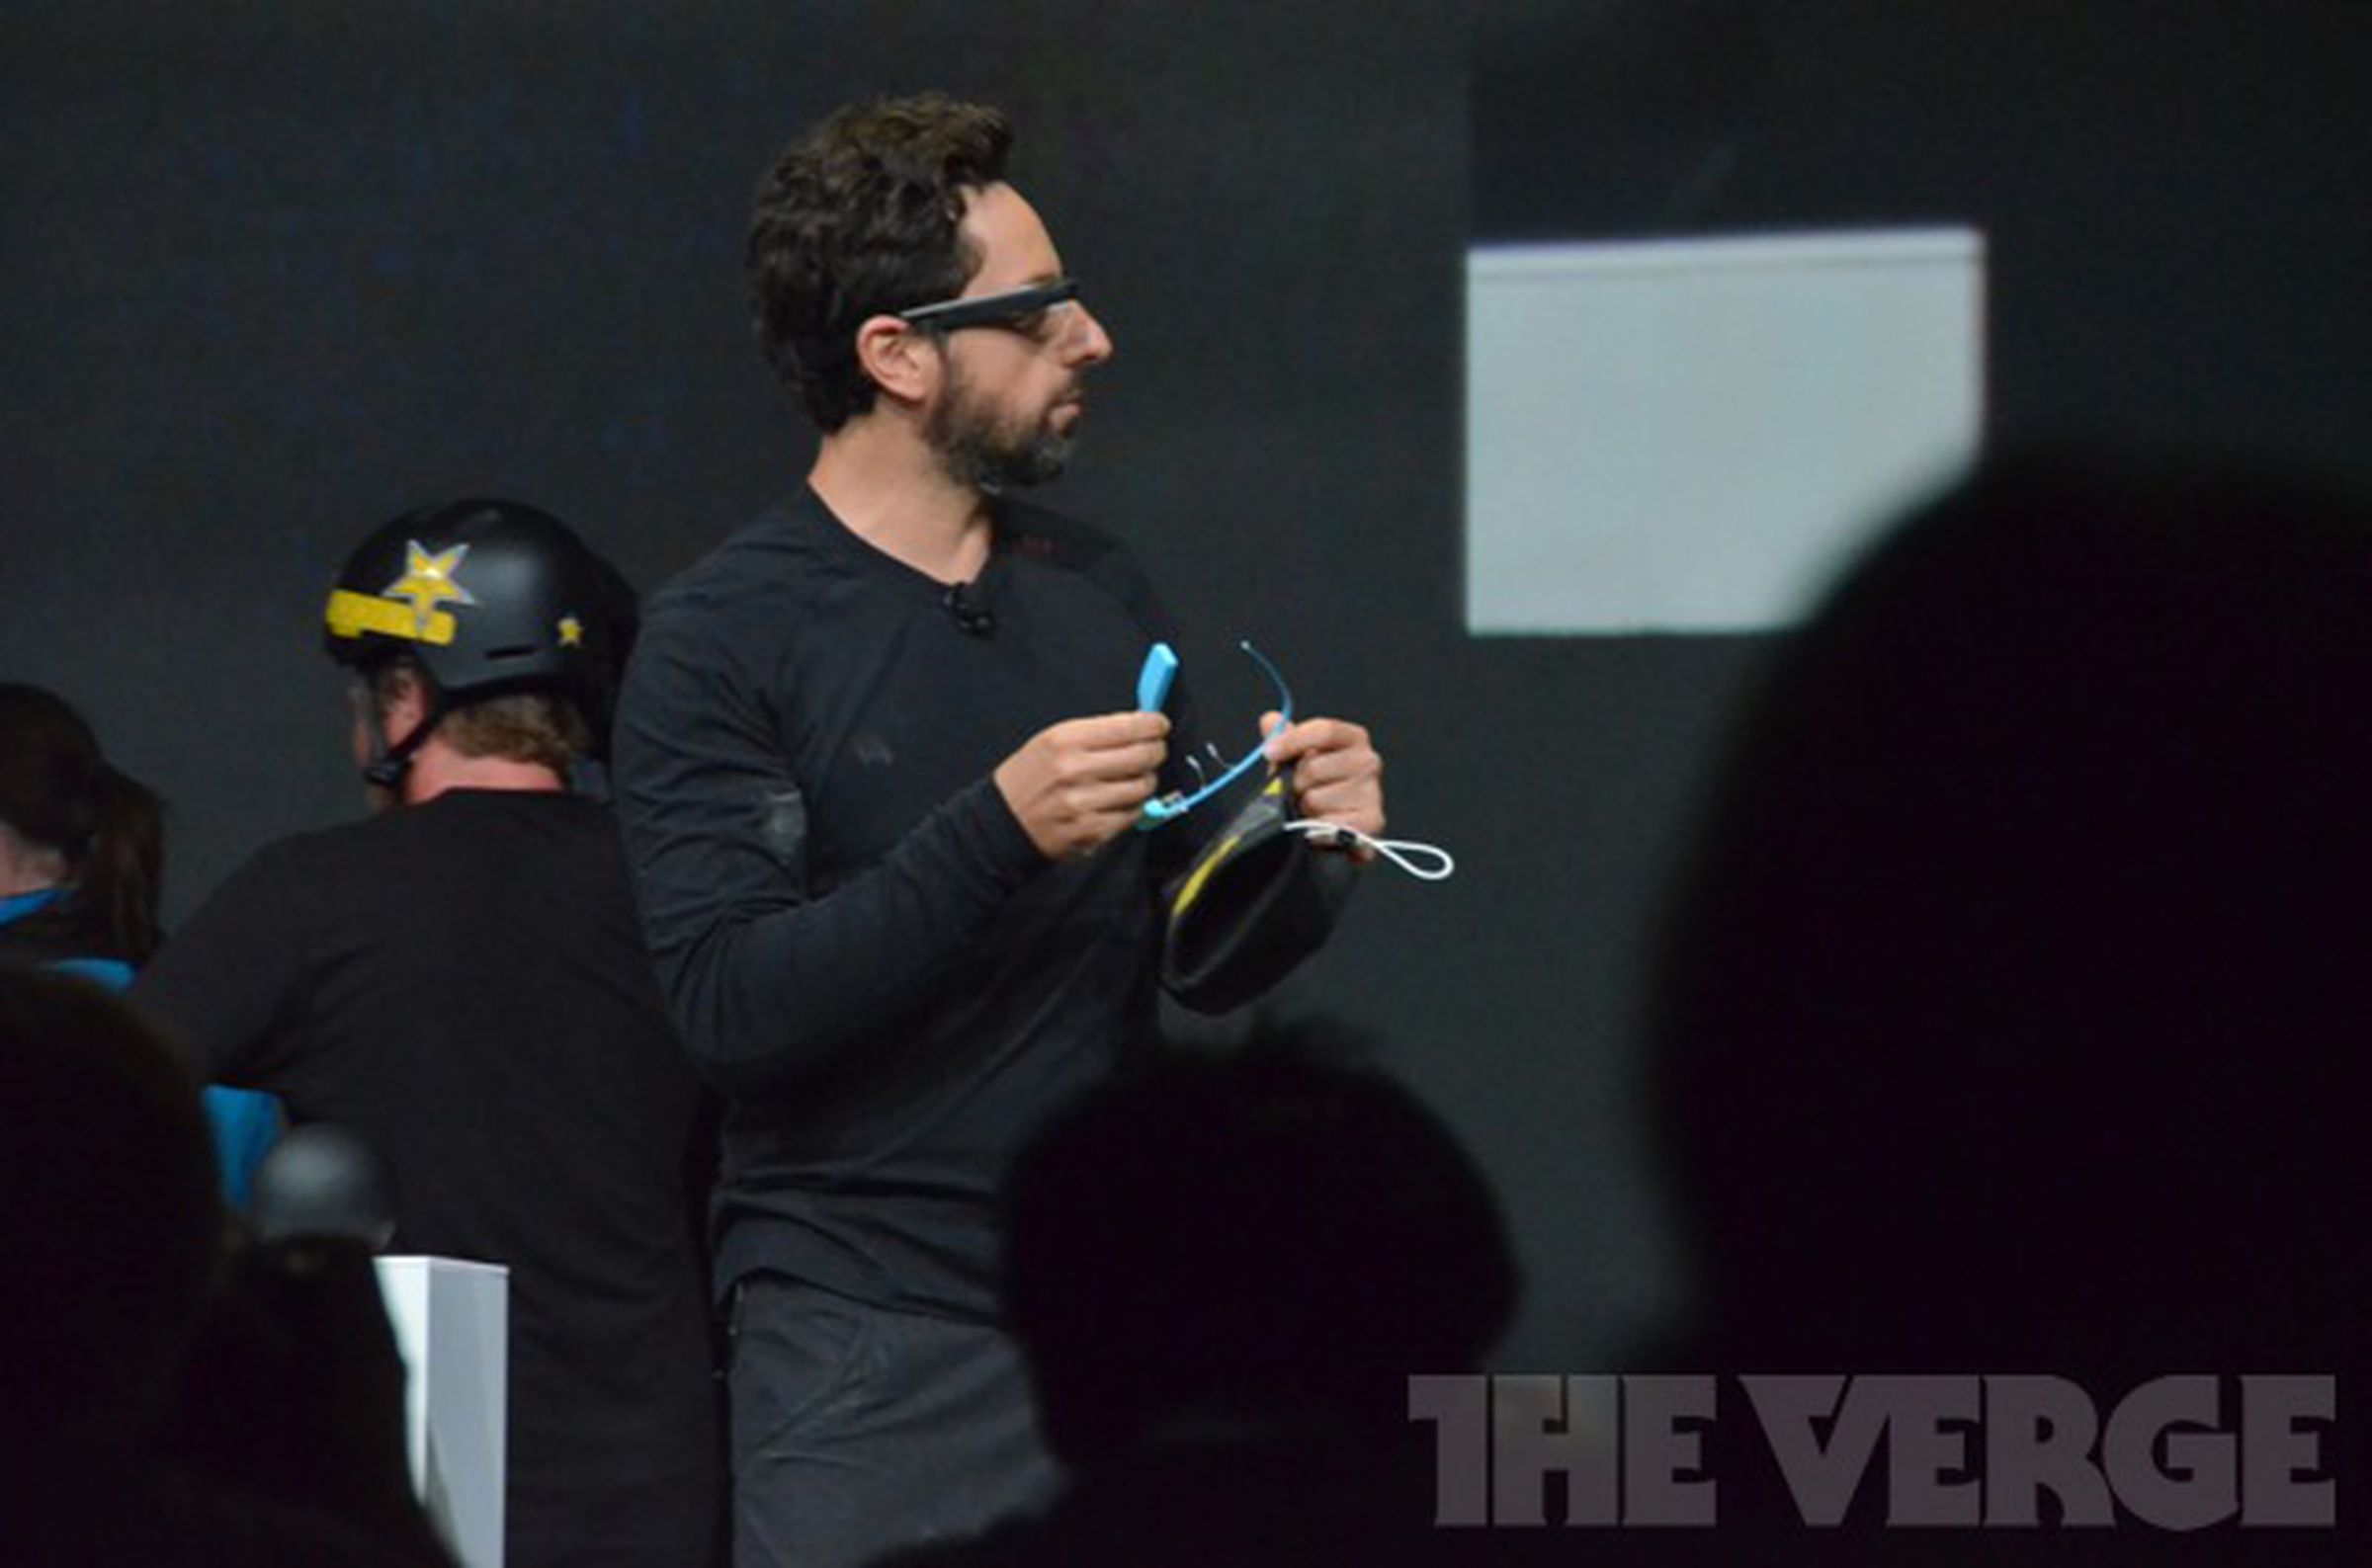 Liveblog images of Project Glass at Google I/O 2012 